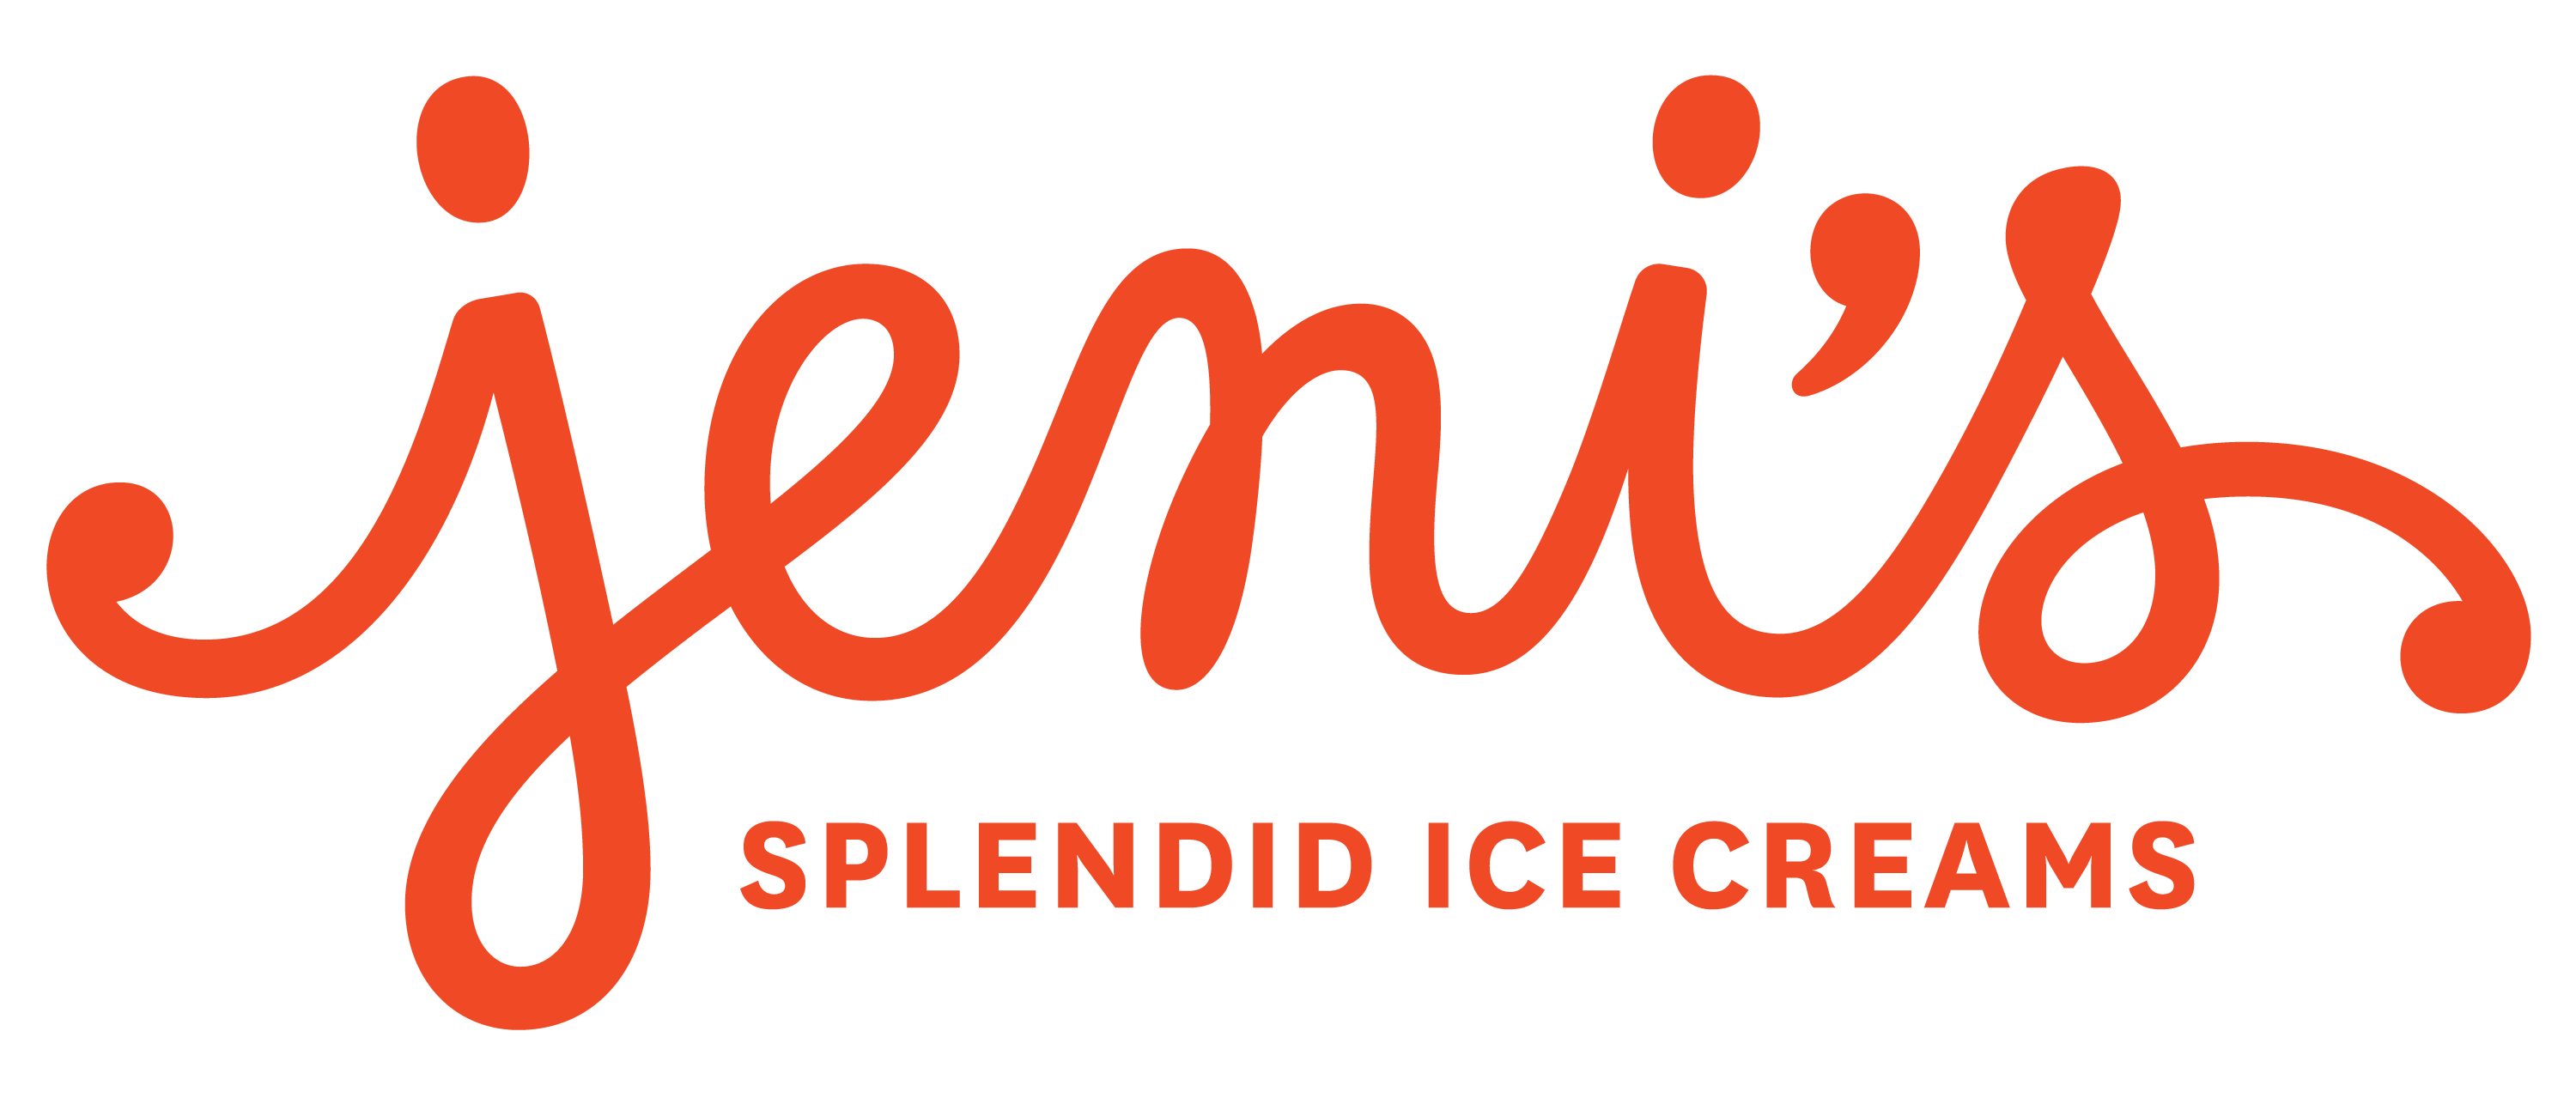 Jenis-Splendid-Ice-Creams-Logotype (1)